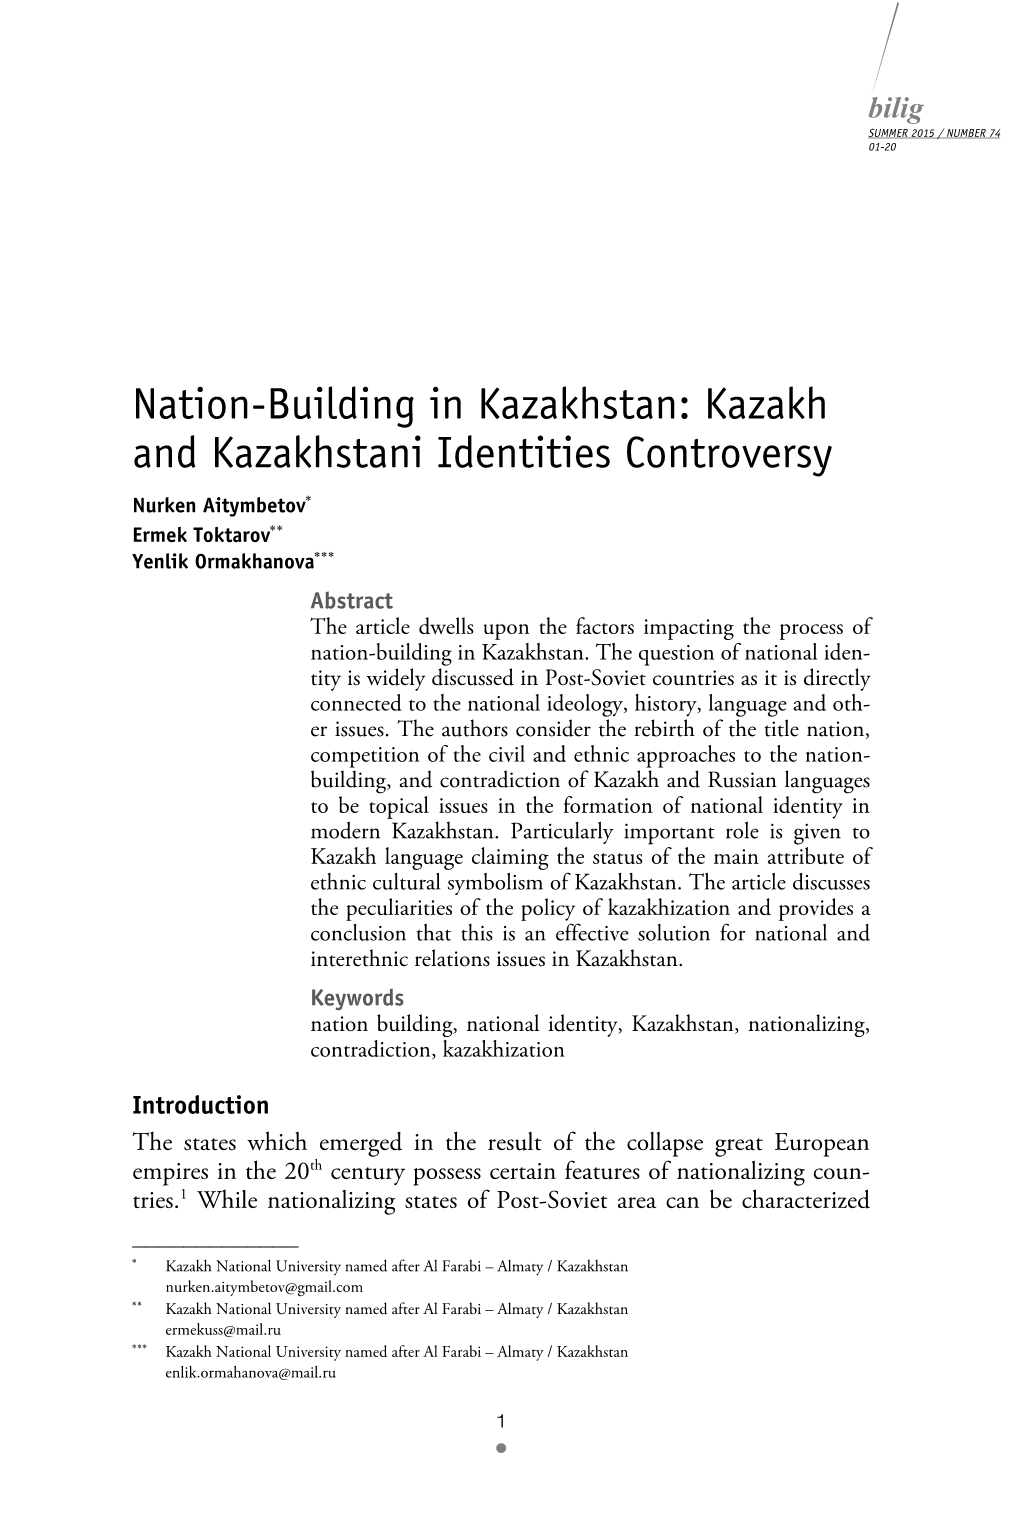 Nation-Building in Kazakhstan: Kazakh and Kazakhstani Identities